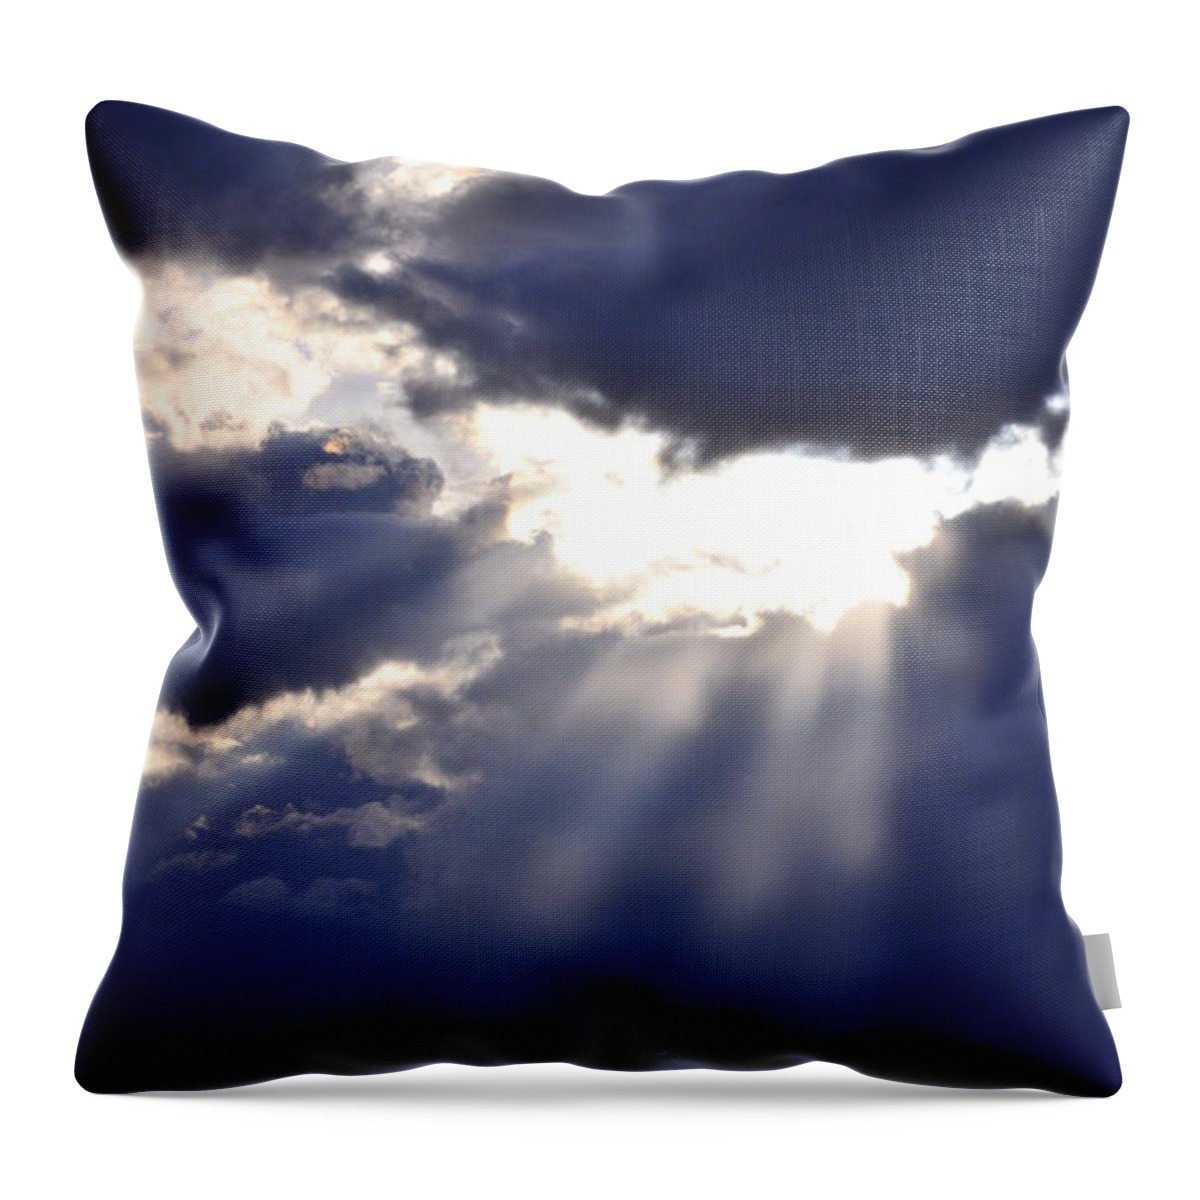 Clouds Throw Pillow featuring the photograph Evening Illumination by Lisa Holland-Gillem